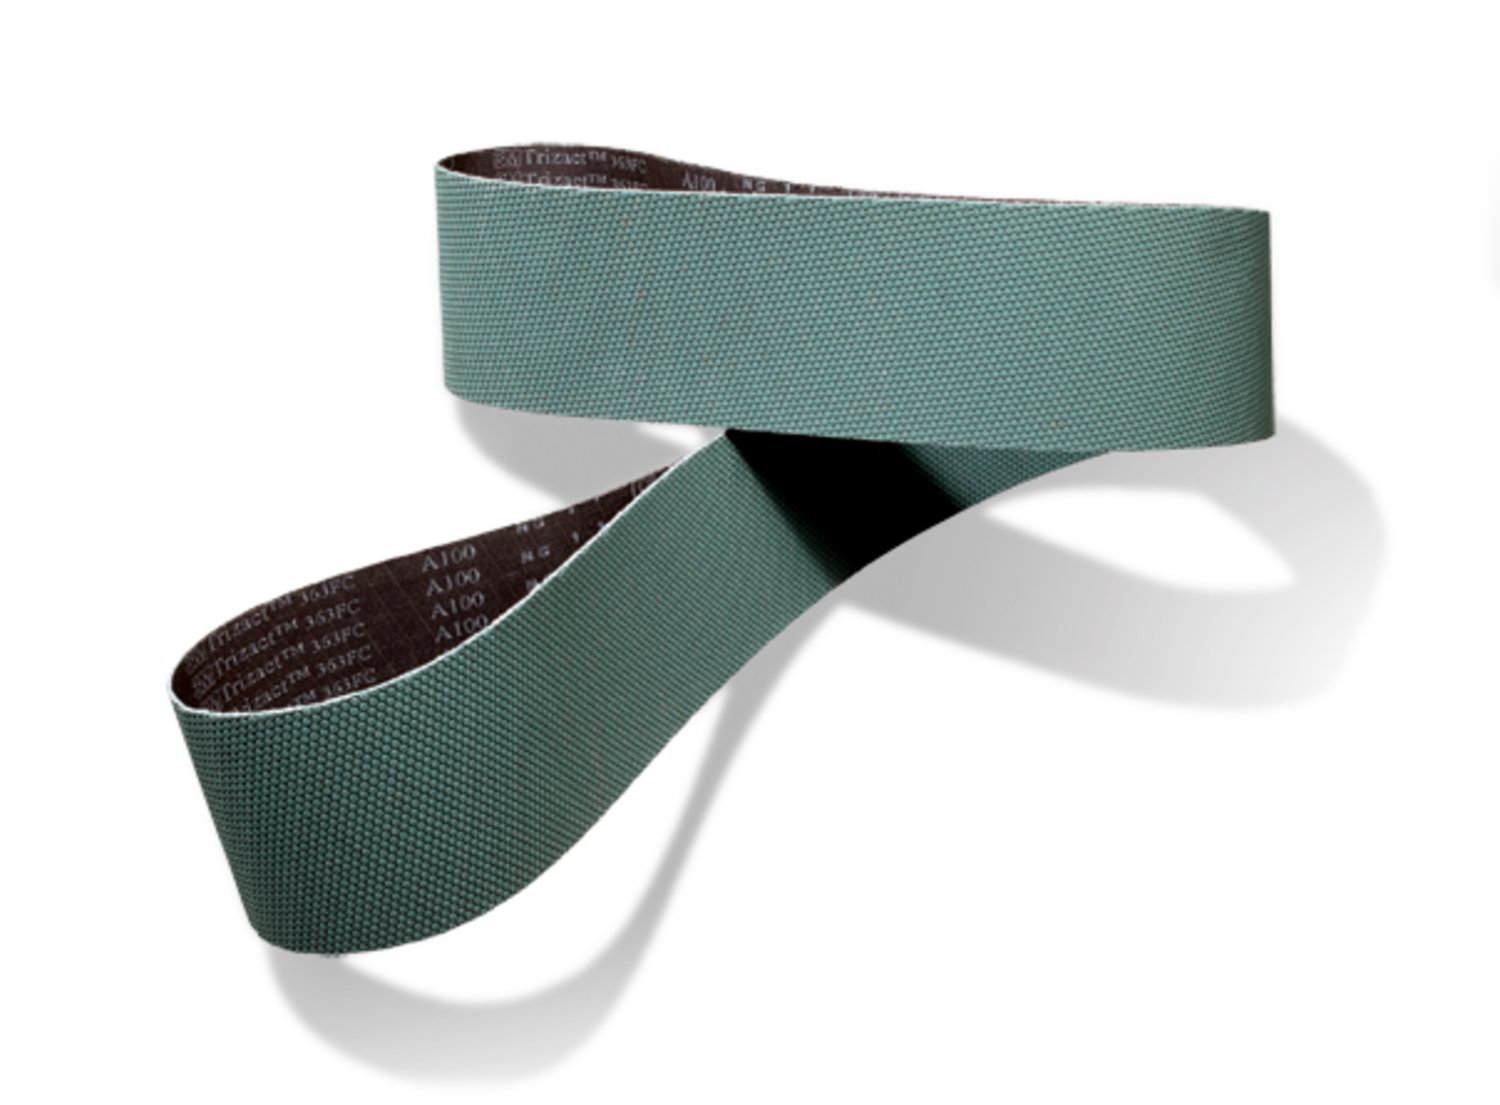 7010512975 - 3M Trizact Cloth Belt 363FC, A160 YF-weight, 19 in x 60 in, Film-lok,
Full-flex